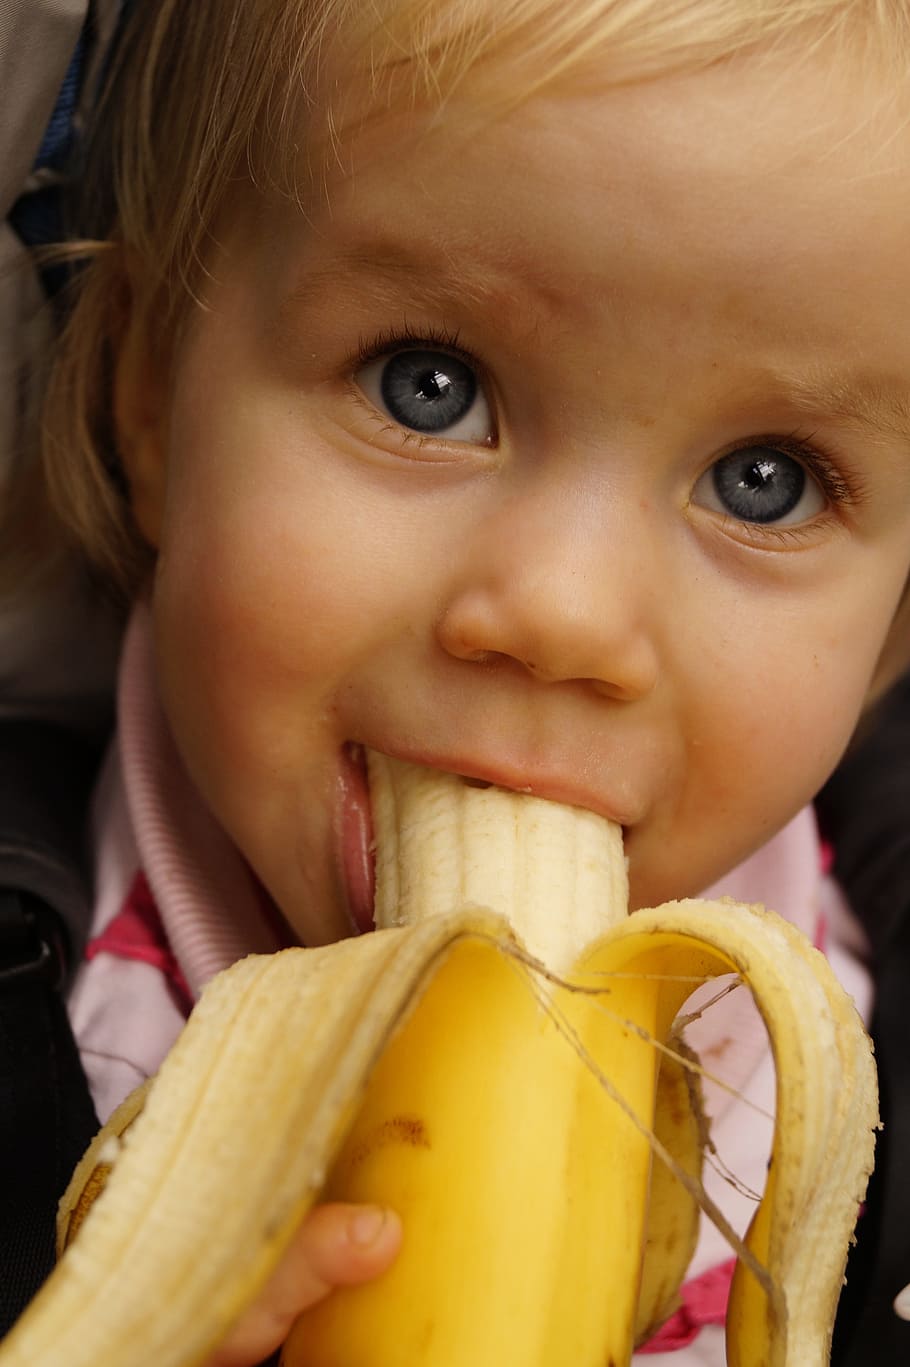 Child, Banana, Cute, Children, funny, fruit, eat, healthy, yellow